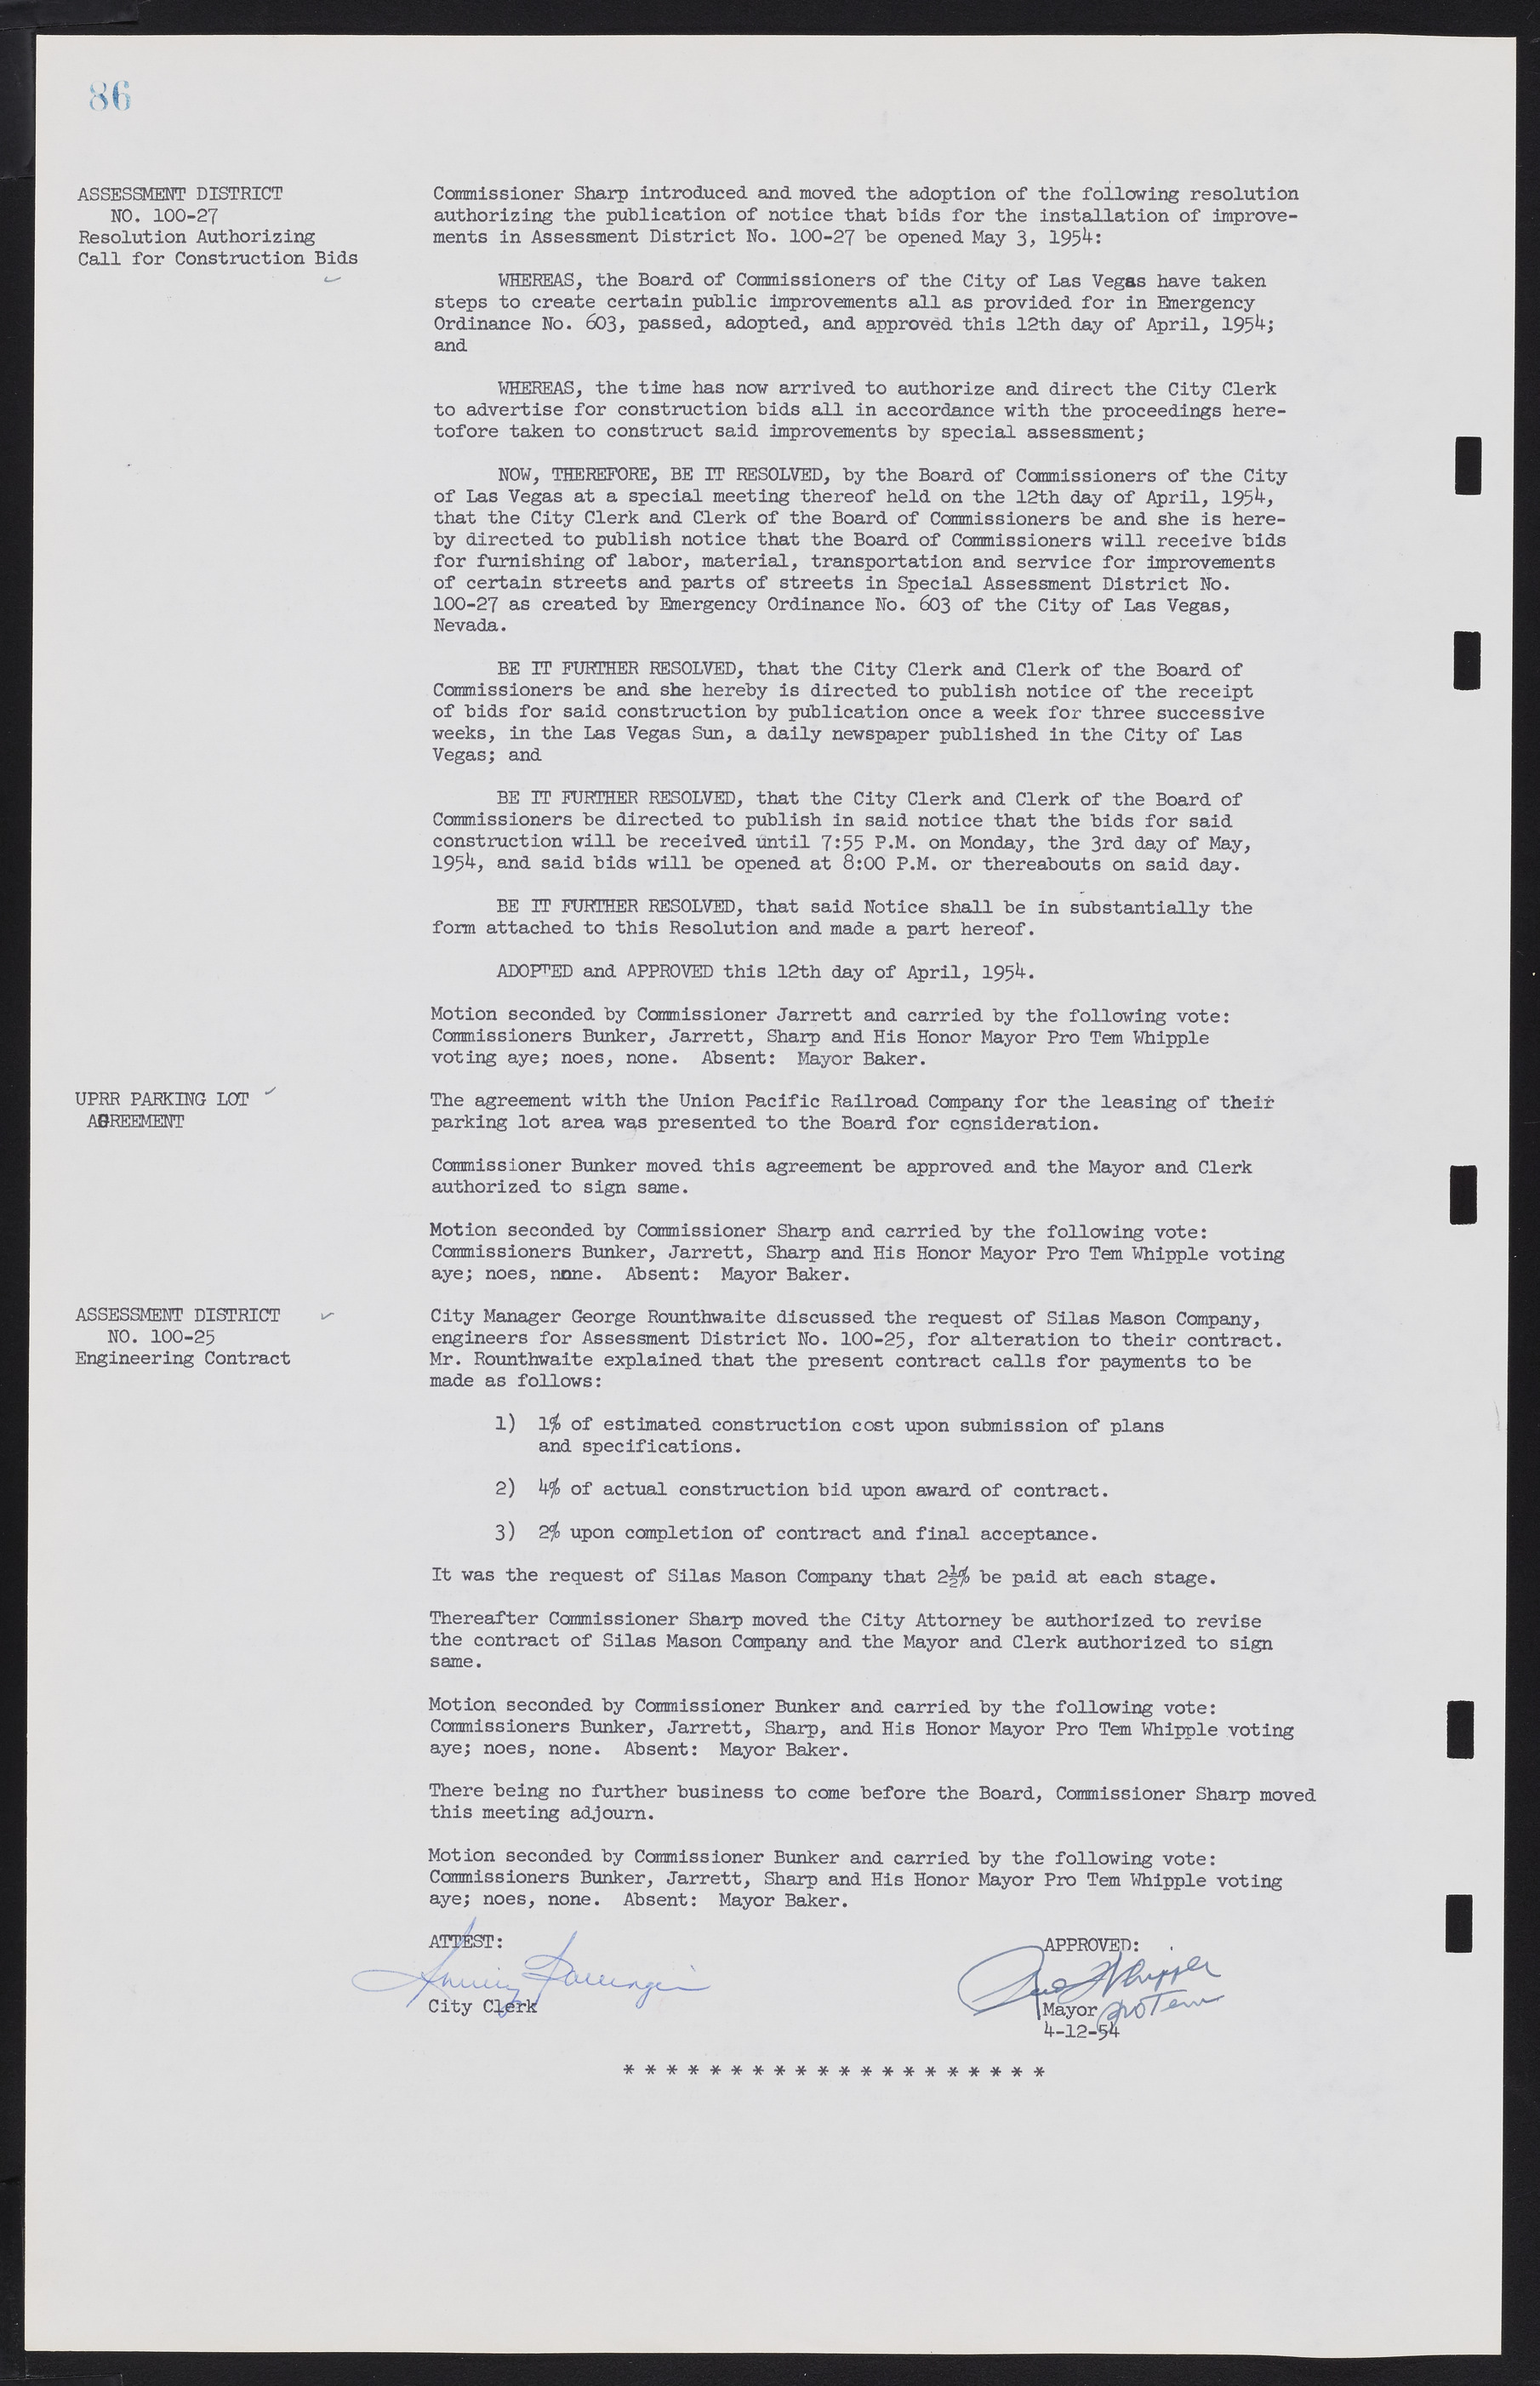 Las Vegas City Commission Minutes, February 17, 1954 to September 21, 1955, lvc000009-90